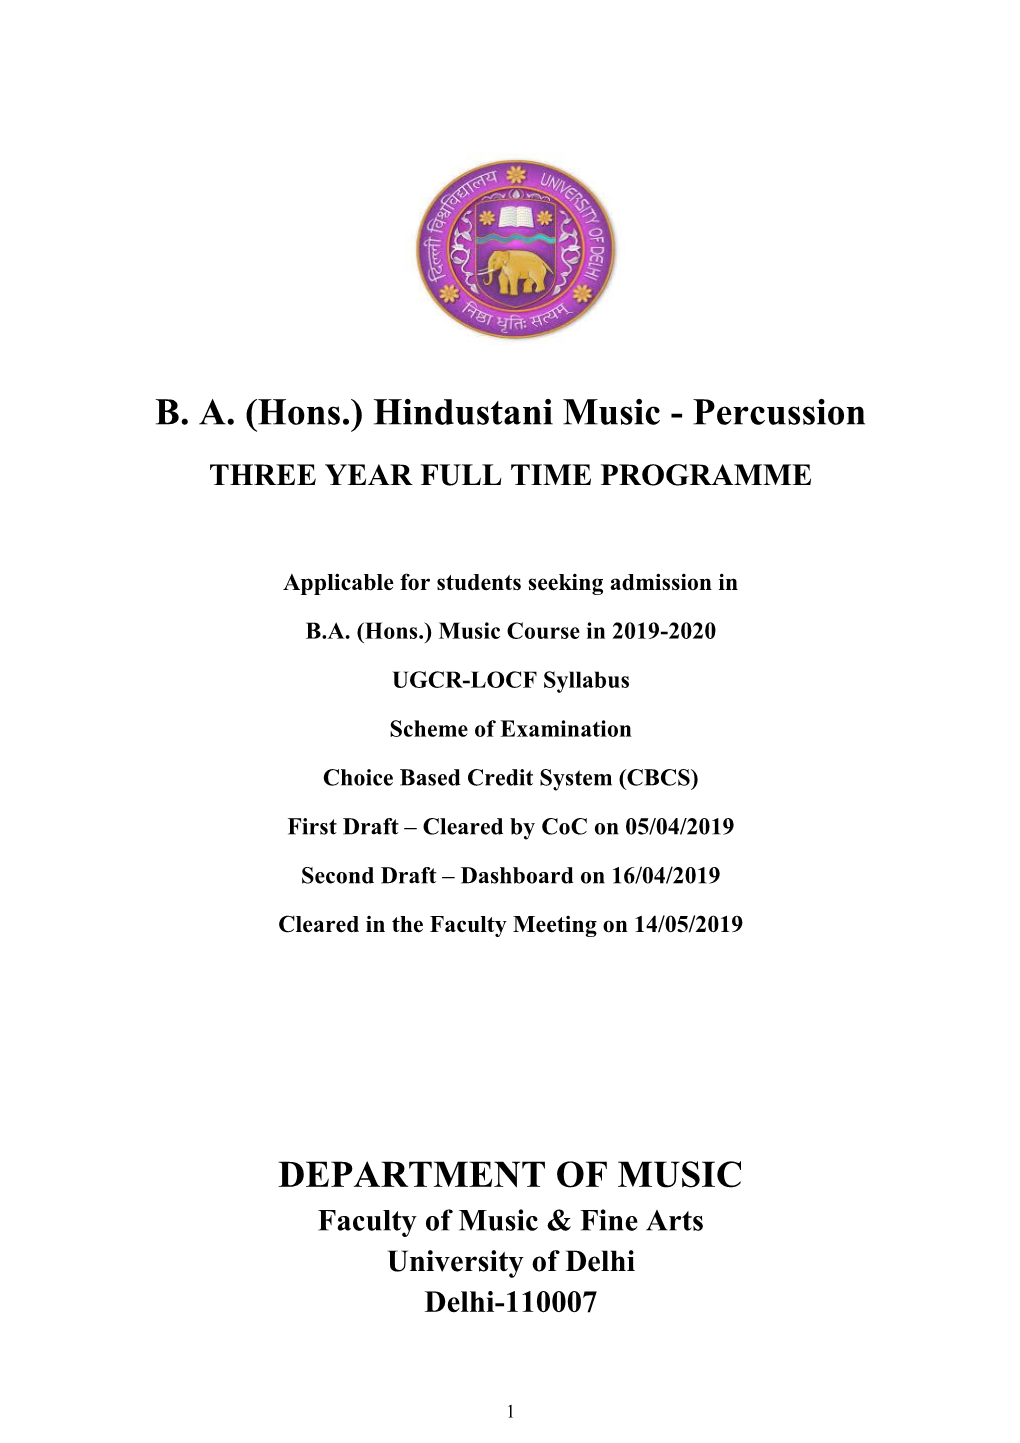 B.A. (Hons.) Hindustani Music – Percussion (Tabla/ Pakhawaj)